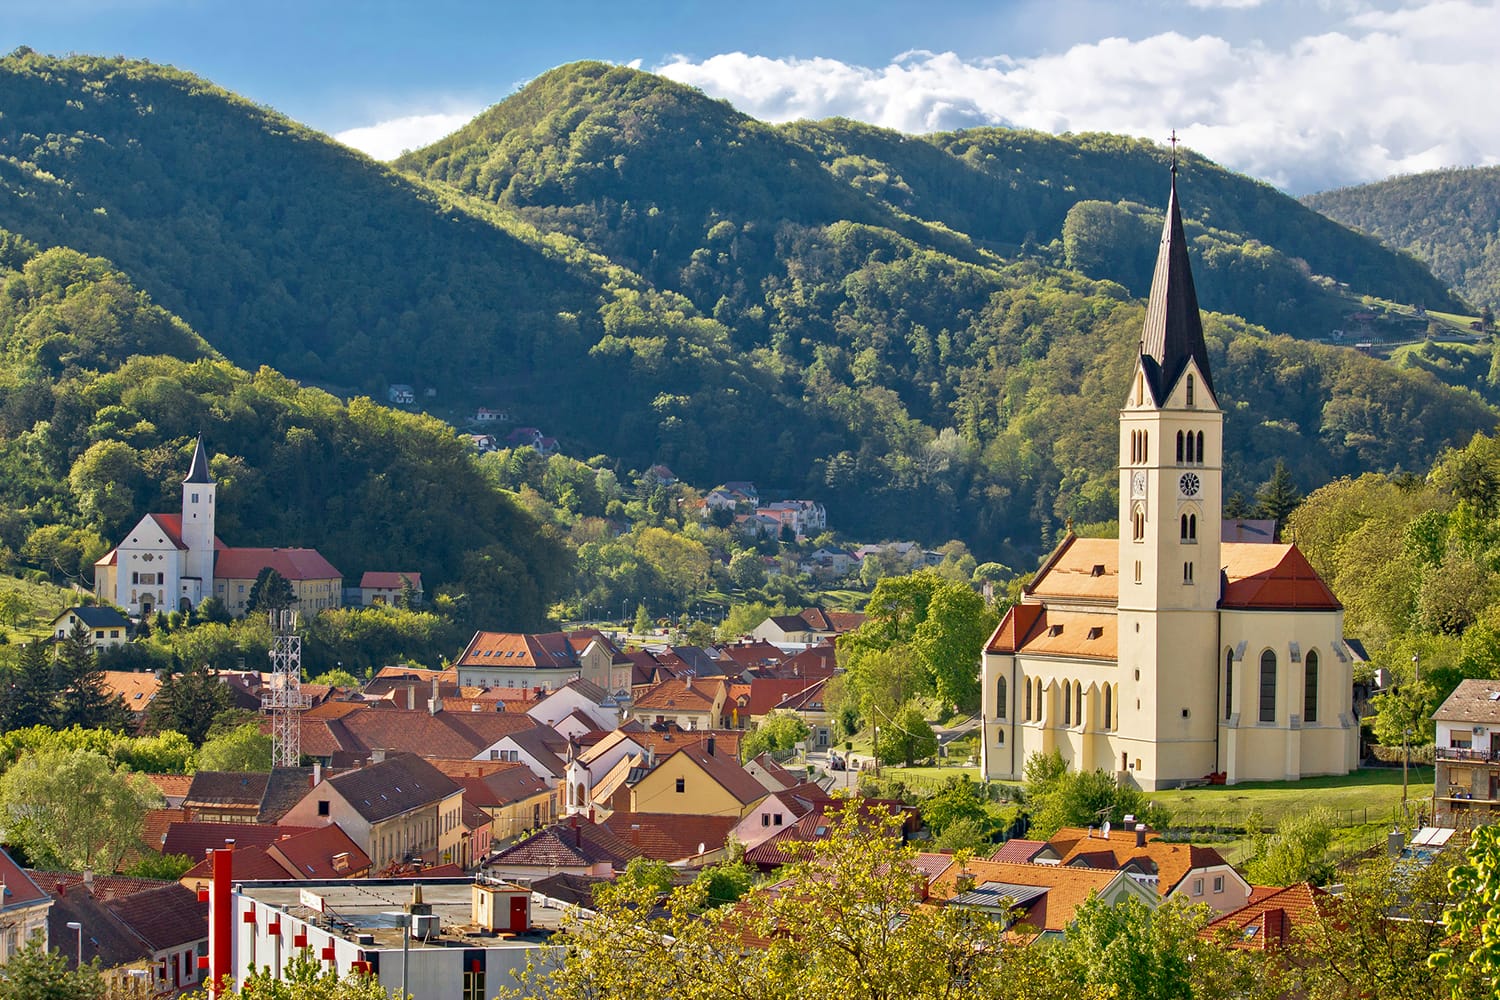 Town of Krapina panoramic view, Zagorje region, Croatia